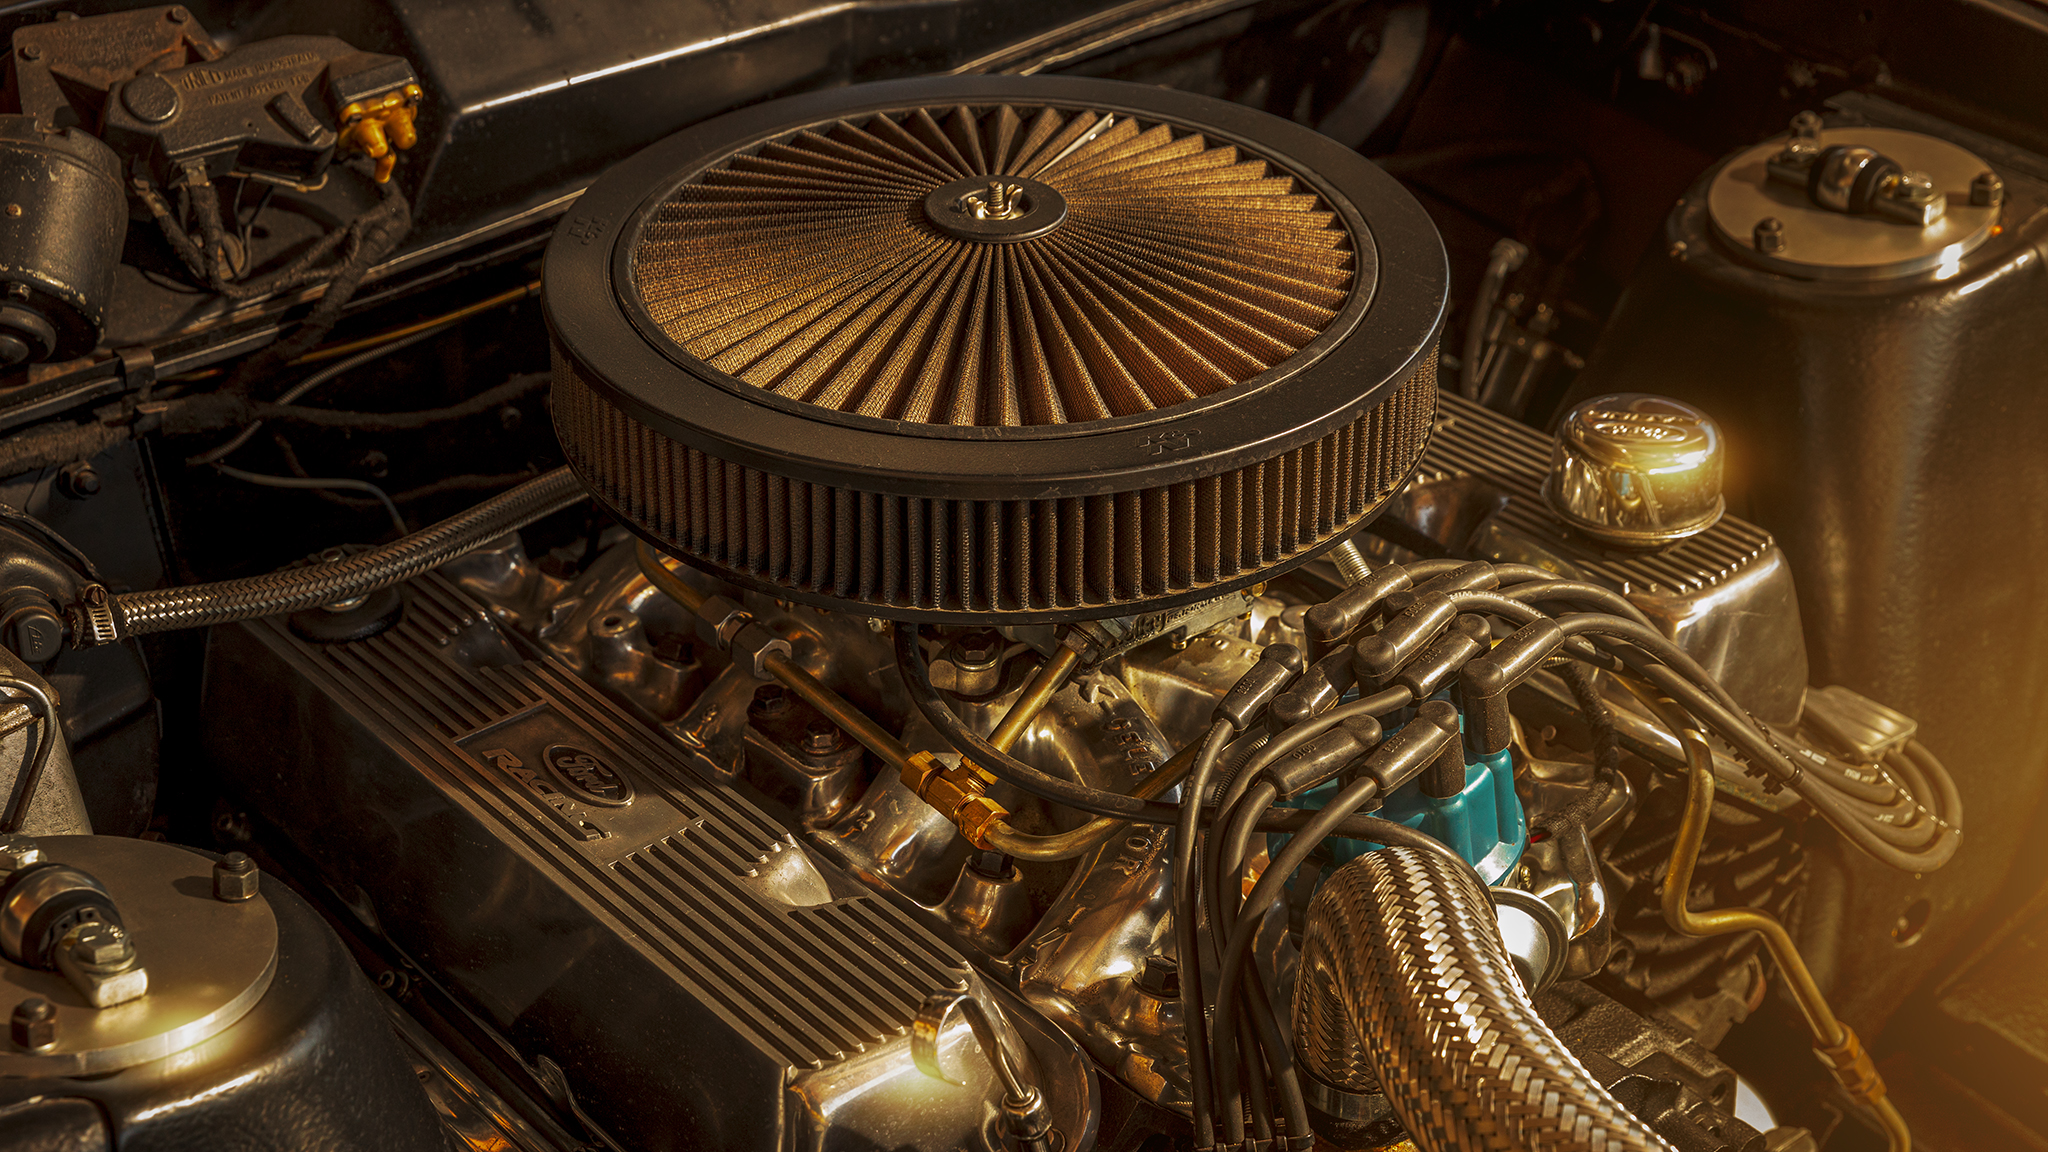 Norbert Schuller Engine Gold Warm Car Wires Golden Hour Gears 2048x1152